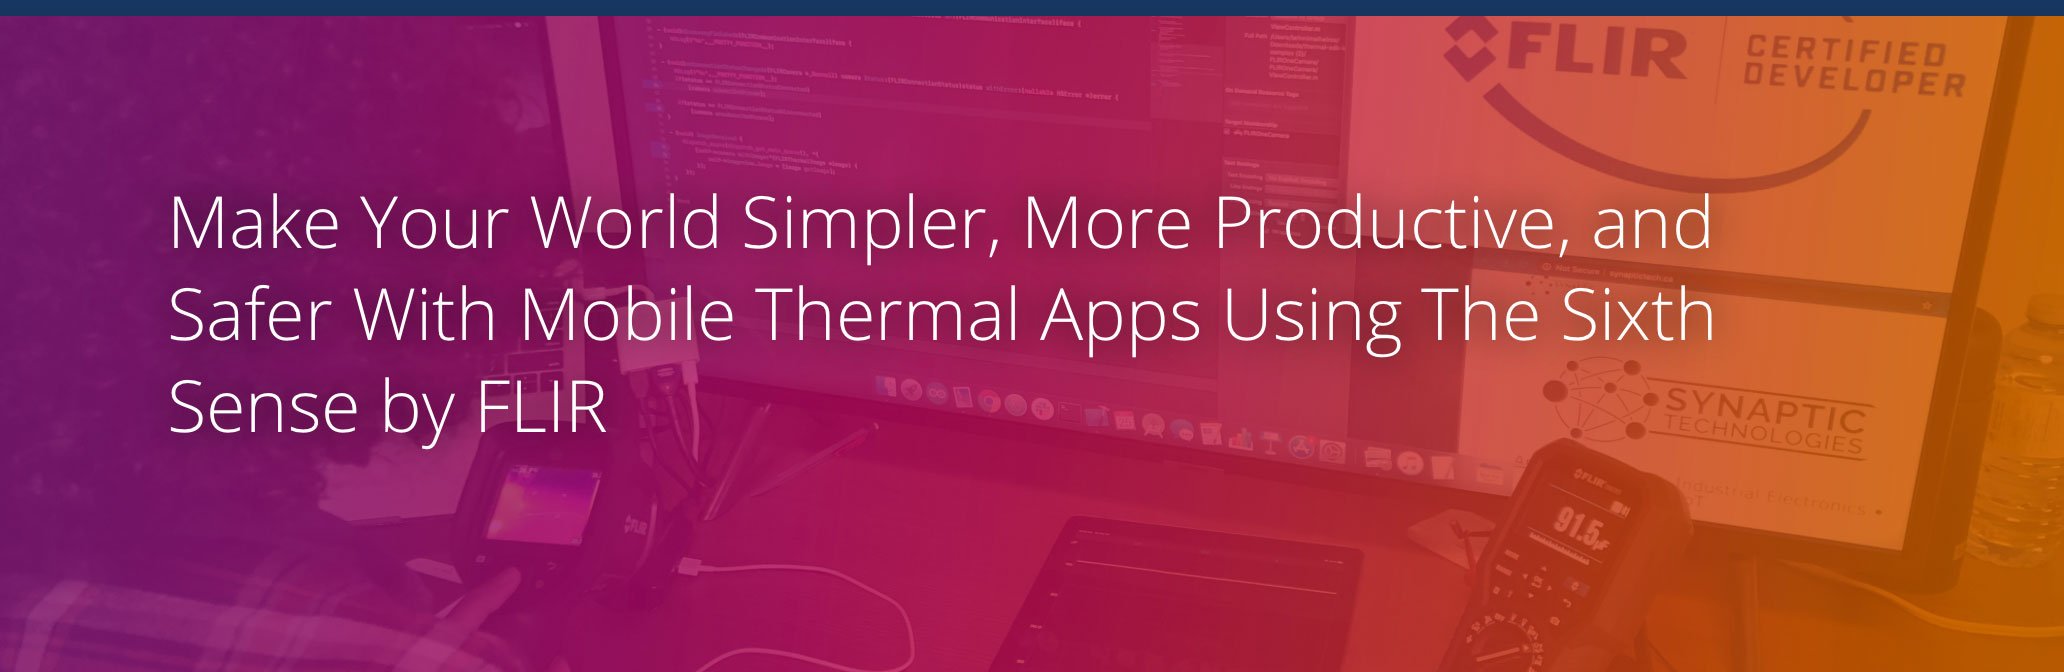 thermal-apps-banner.jpg